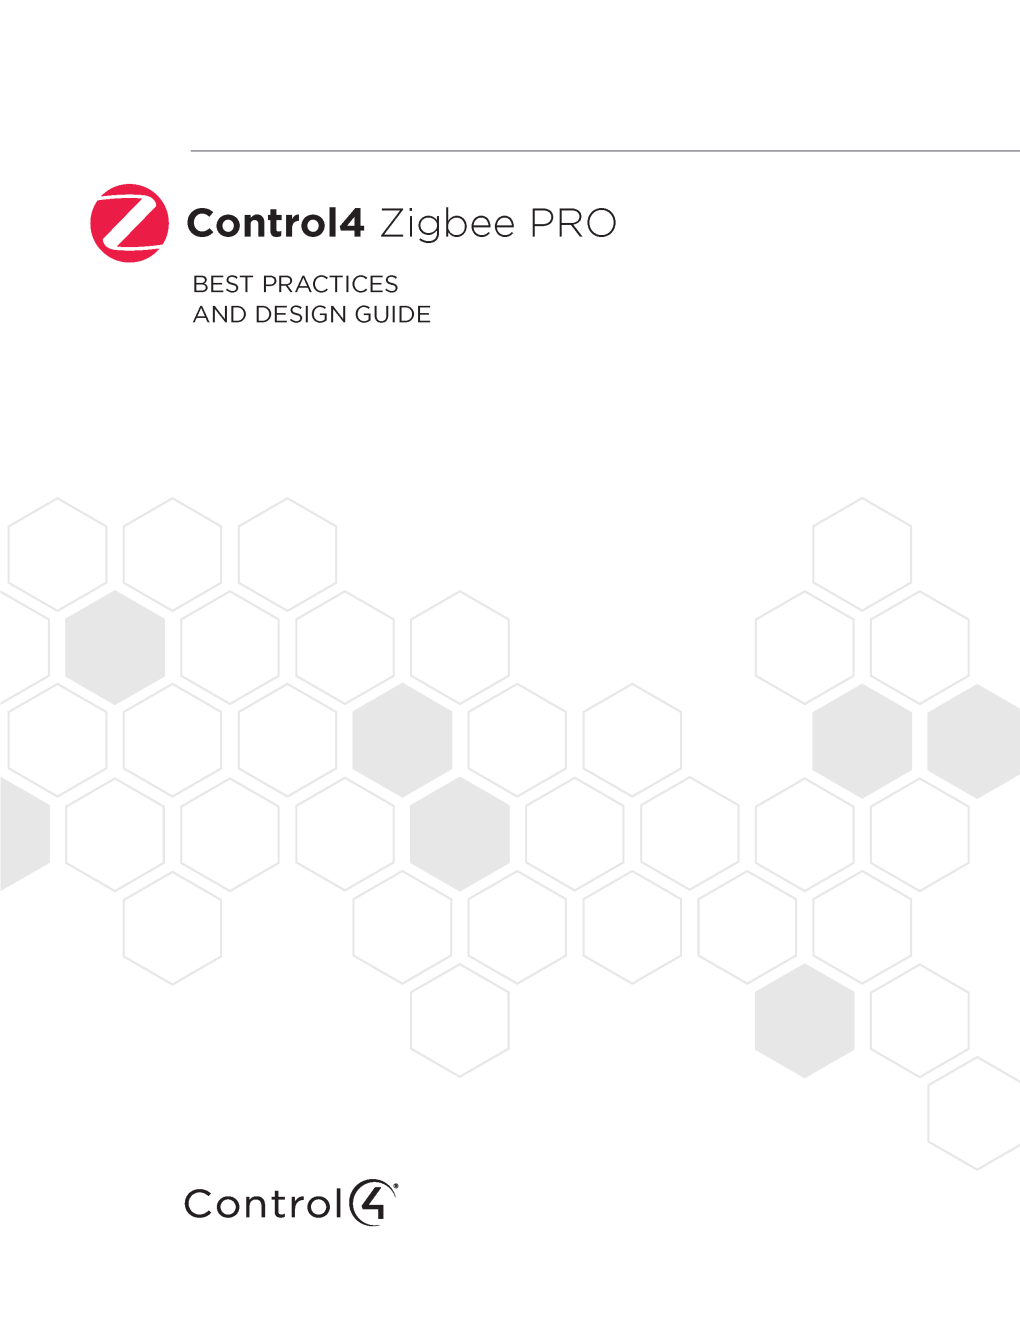 Control4 Zigbee Best Practices and Design Guide